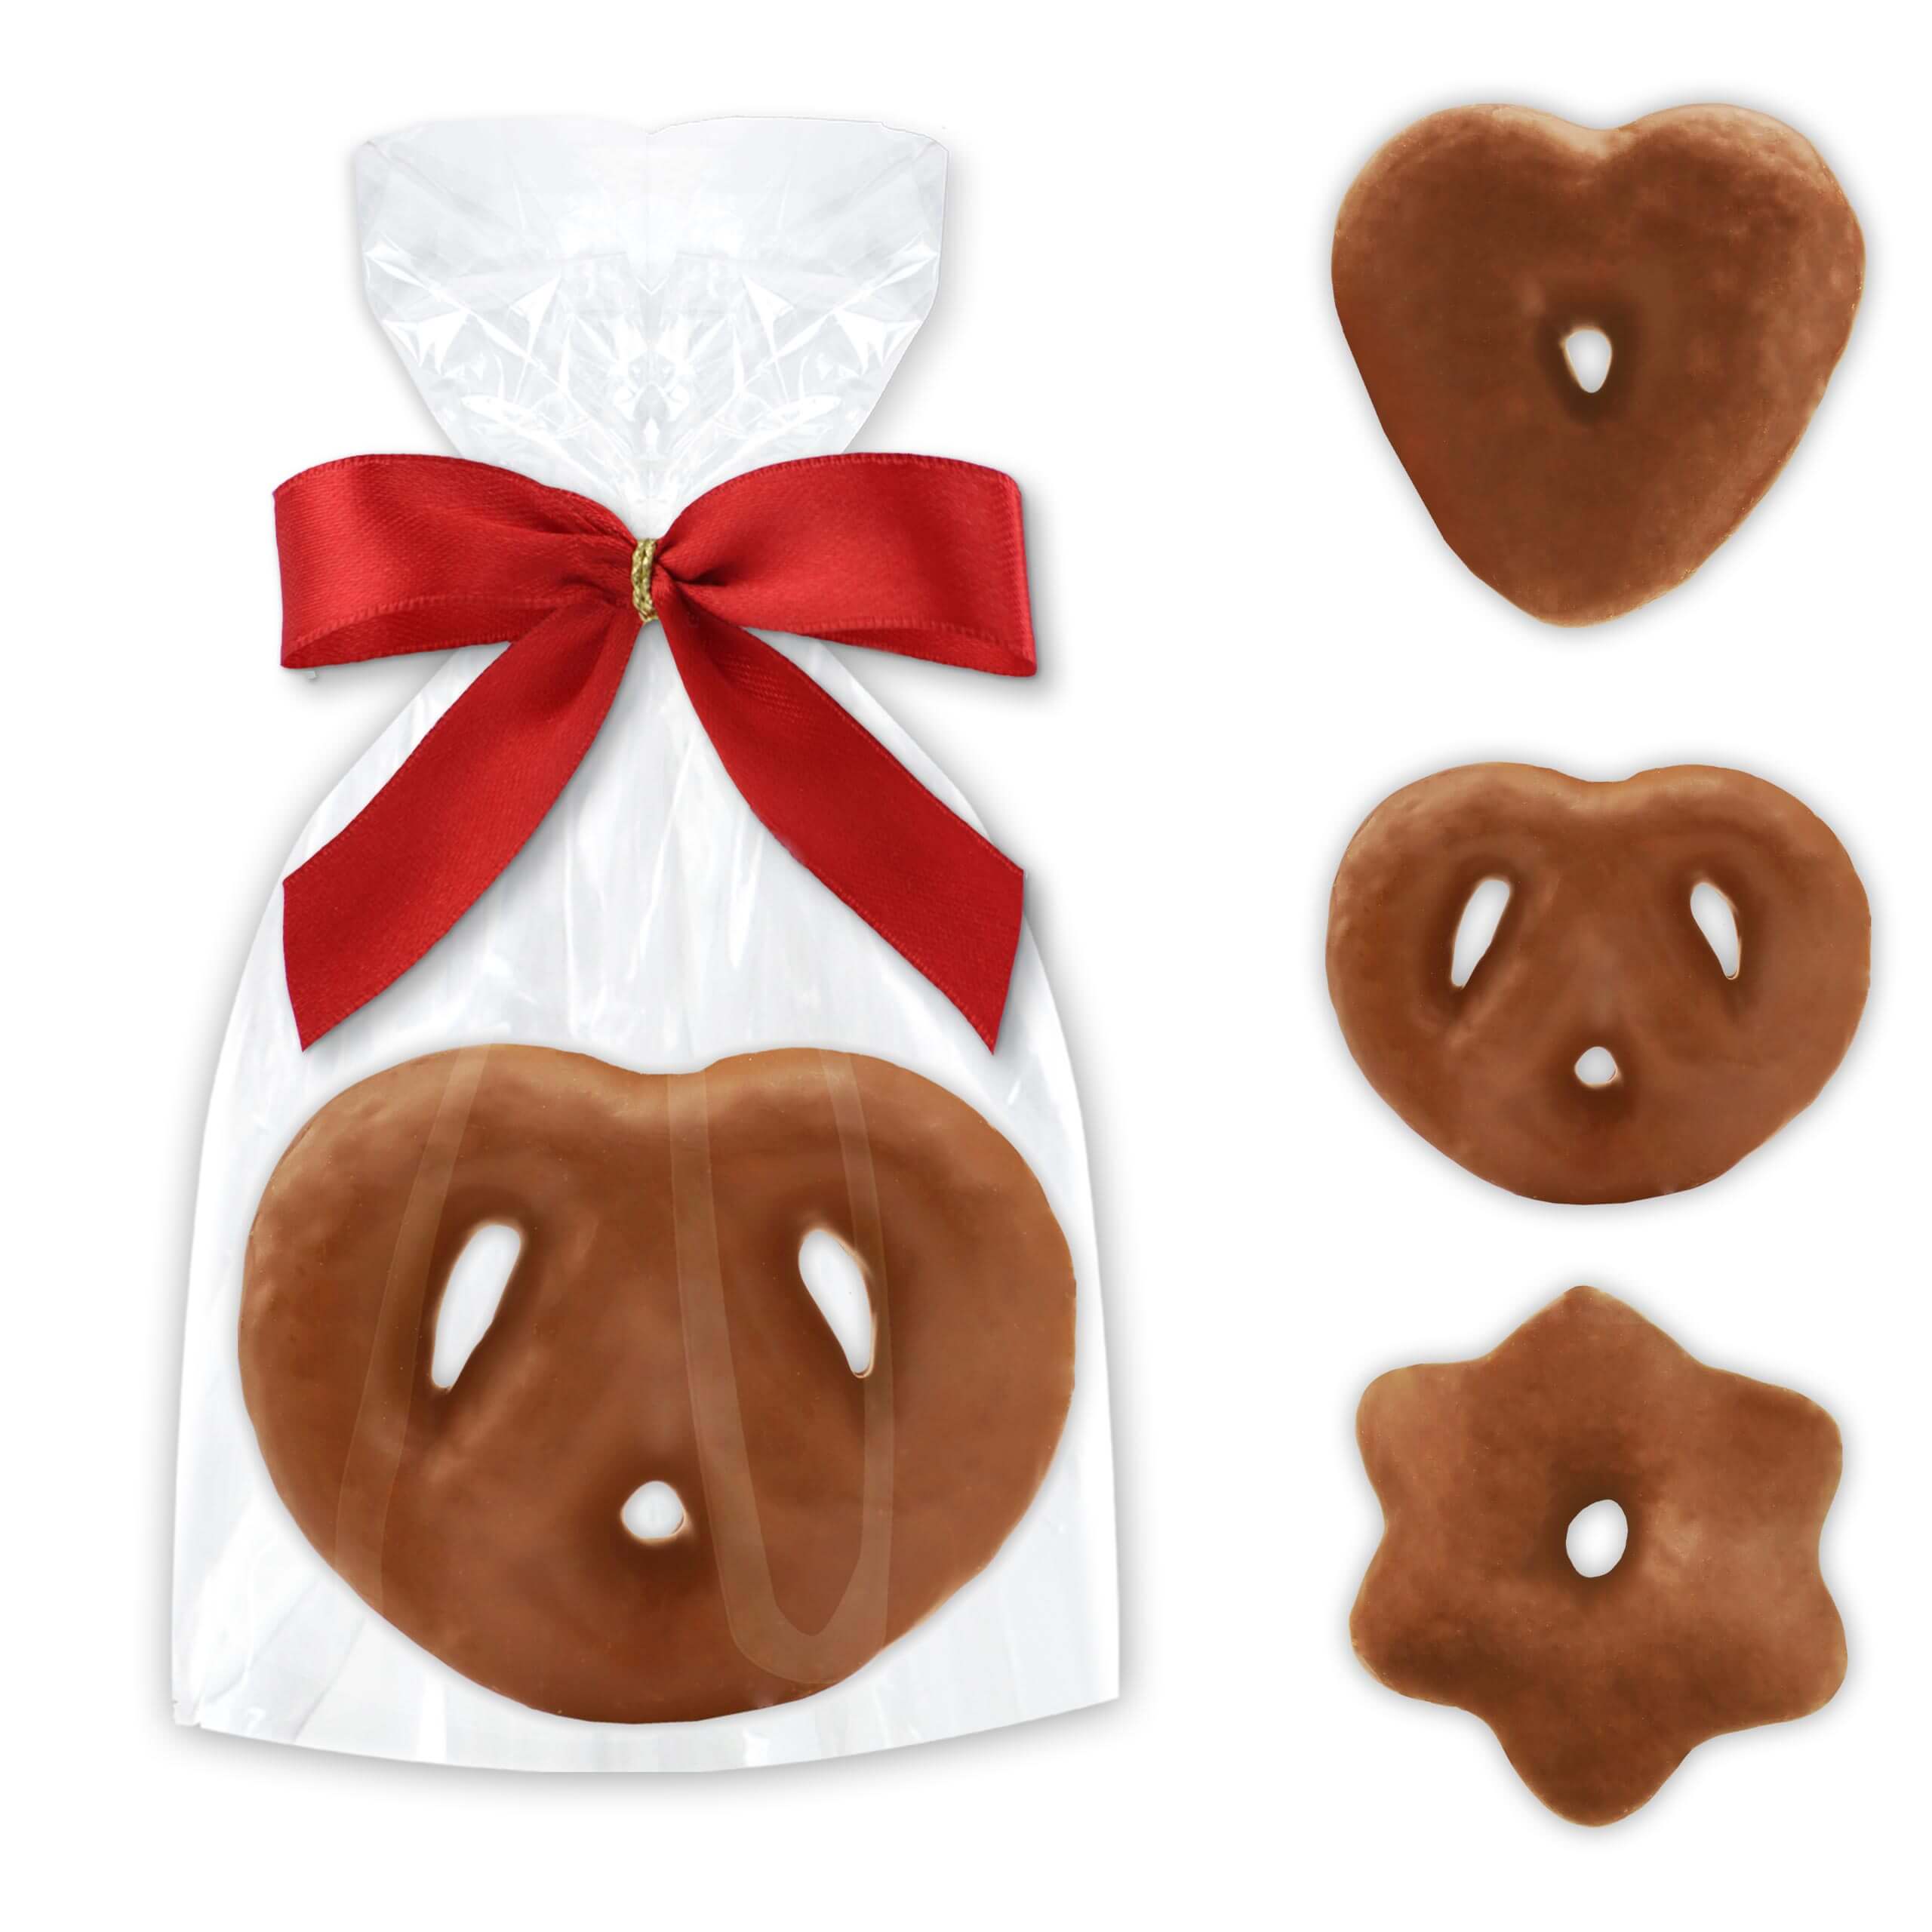 Heart - Pretzel - Star gingerbread - single packed